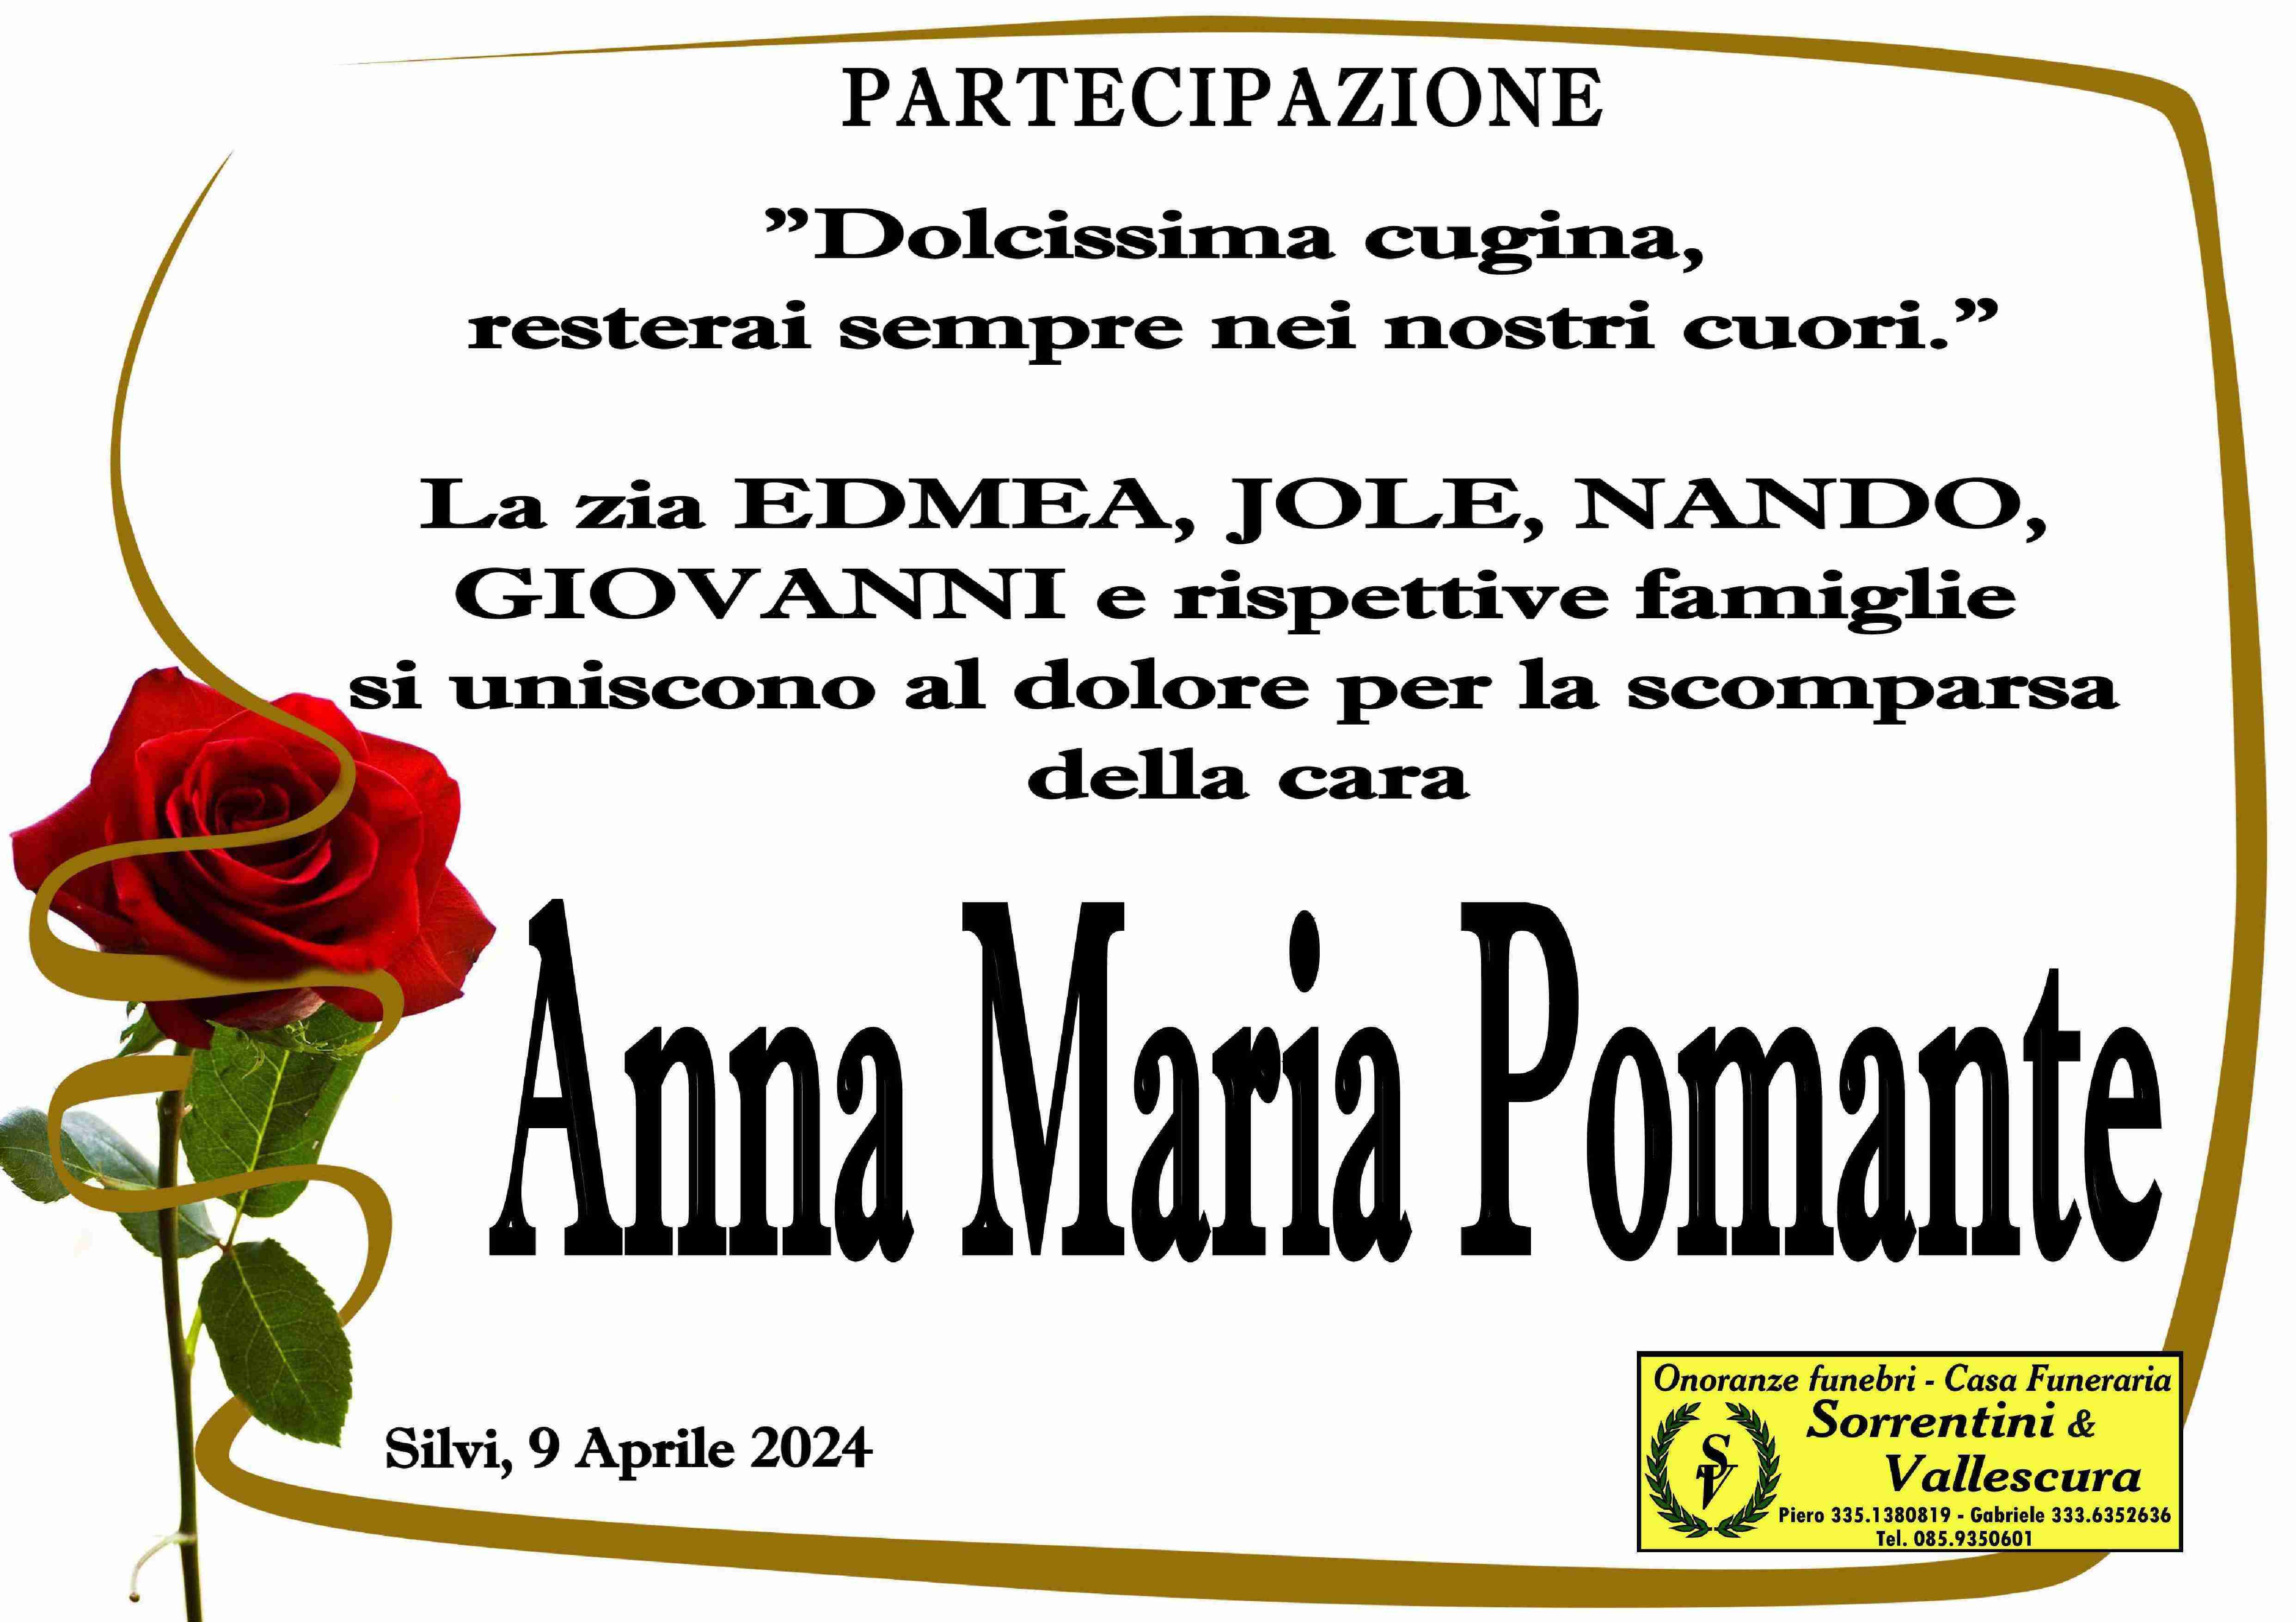 Anna Maria Pomante